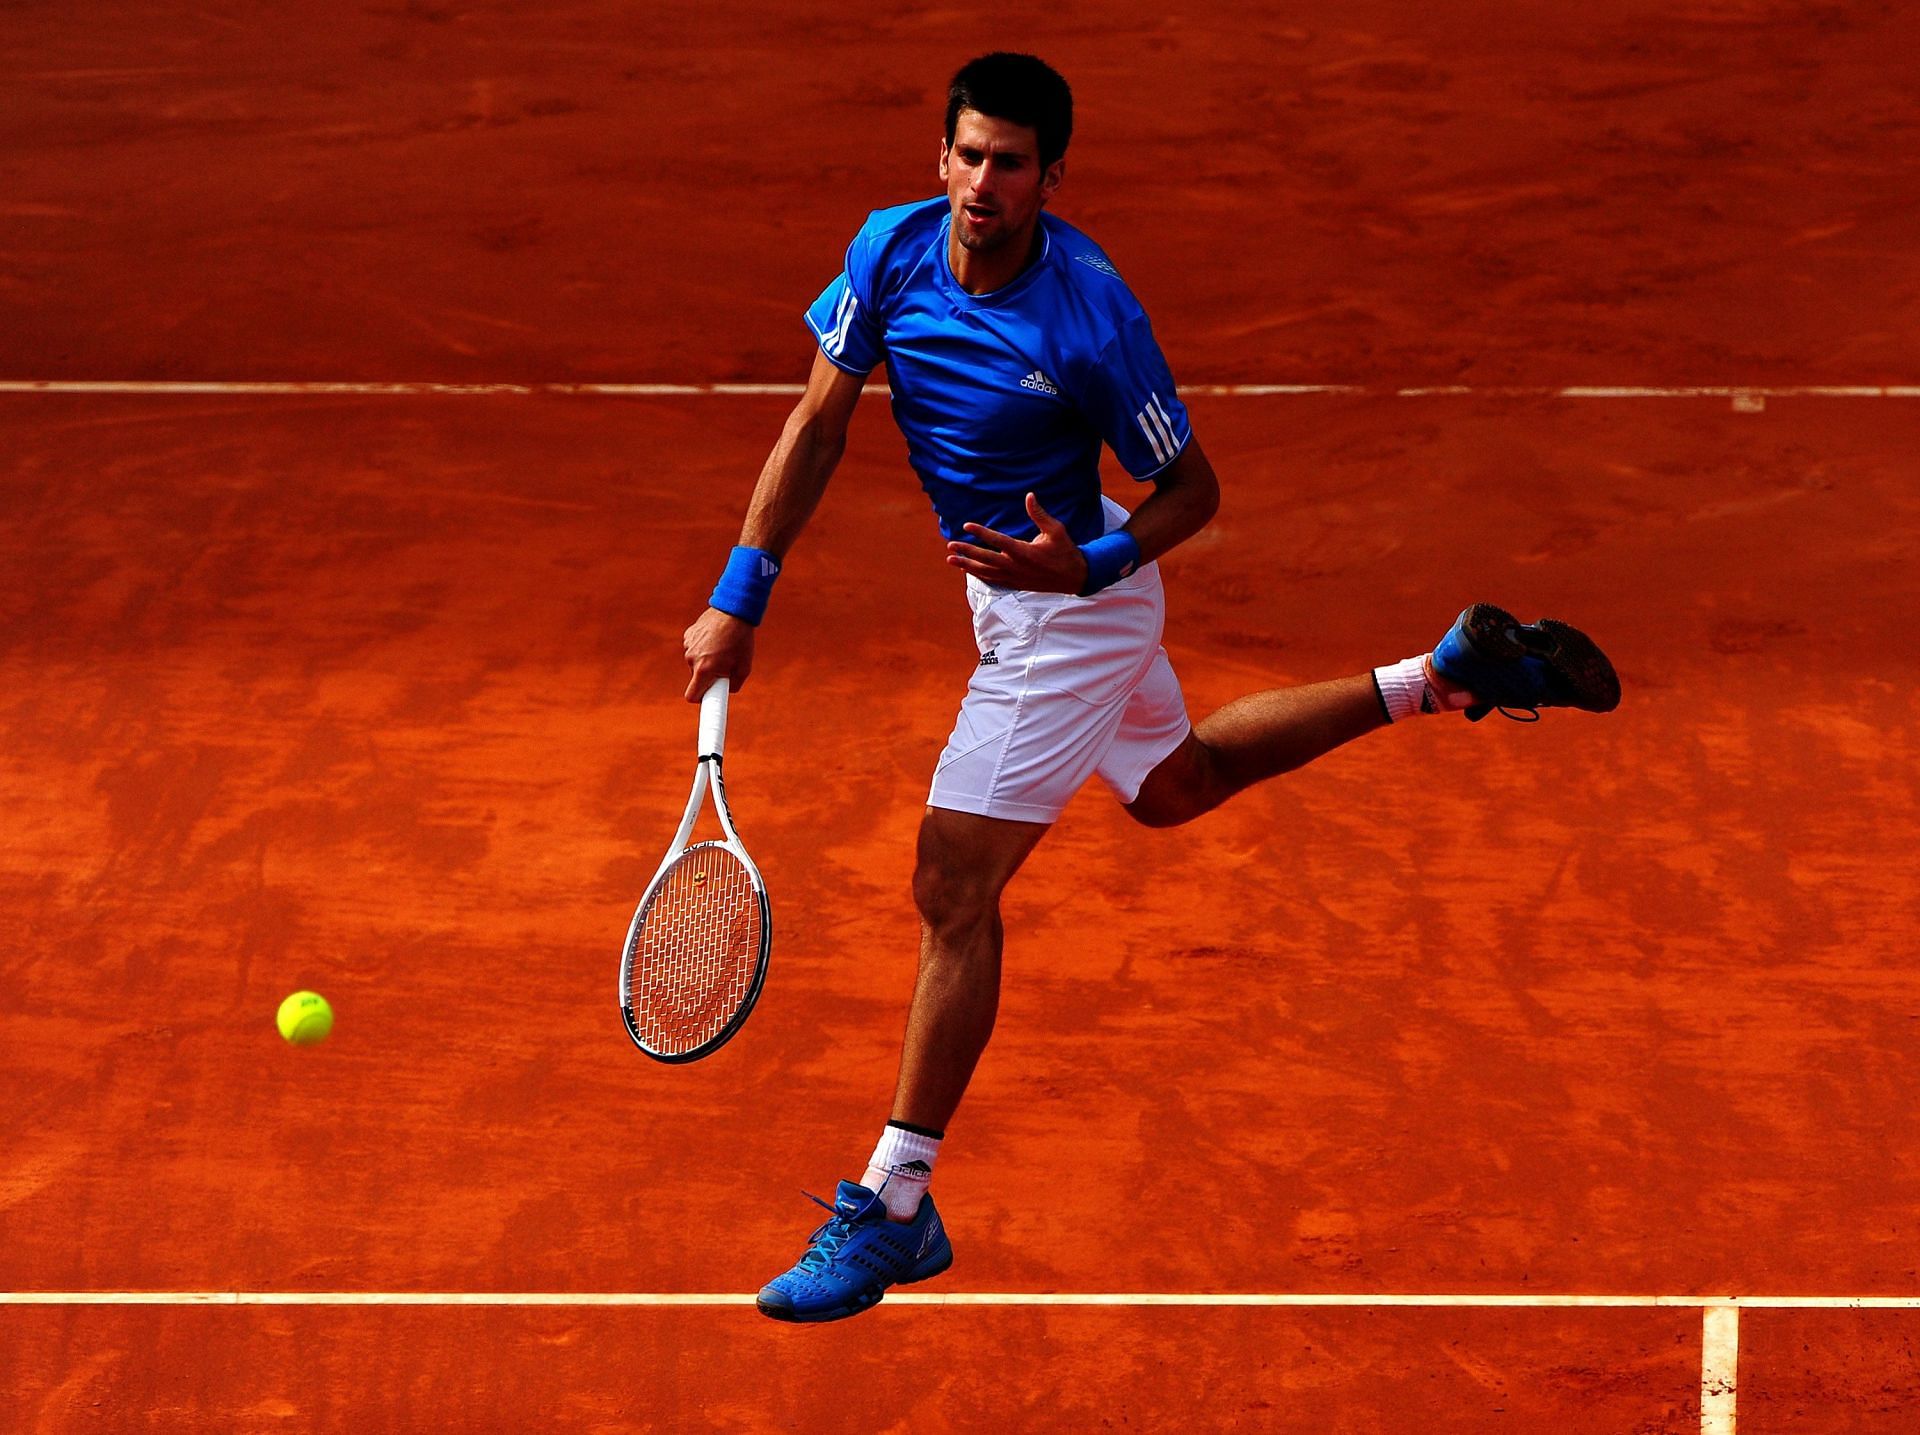 Novak Djokovic had an epic battle with Rafael Nadal in Madrid in 2009.